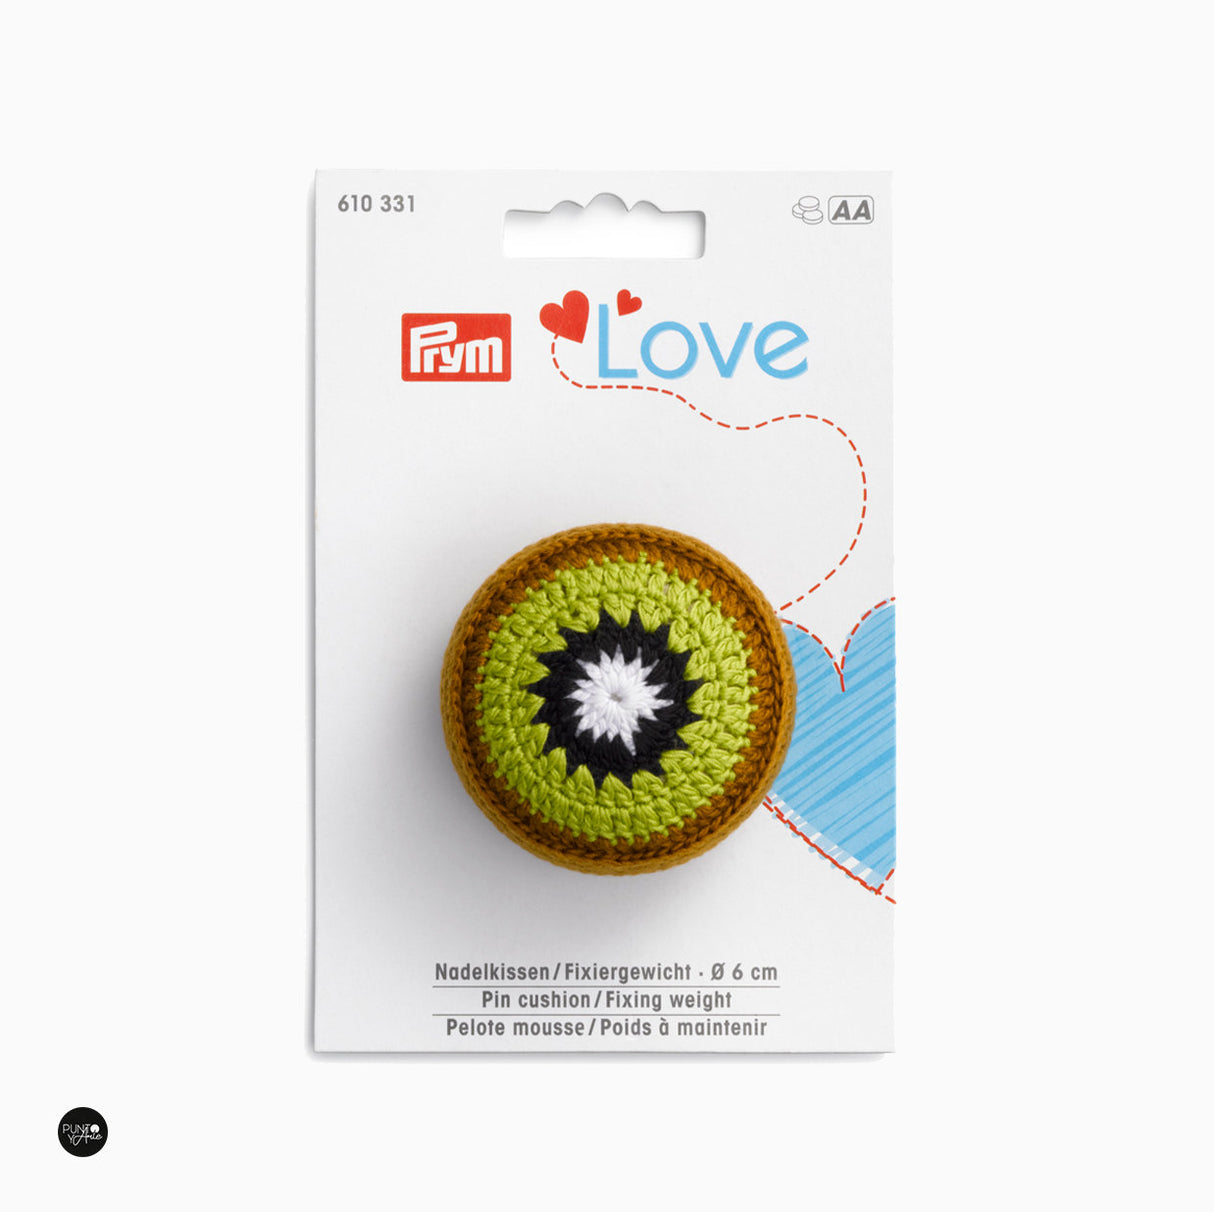 Kiwi pincushion. Fixing weight - Prym Love 610331